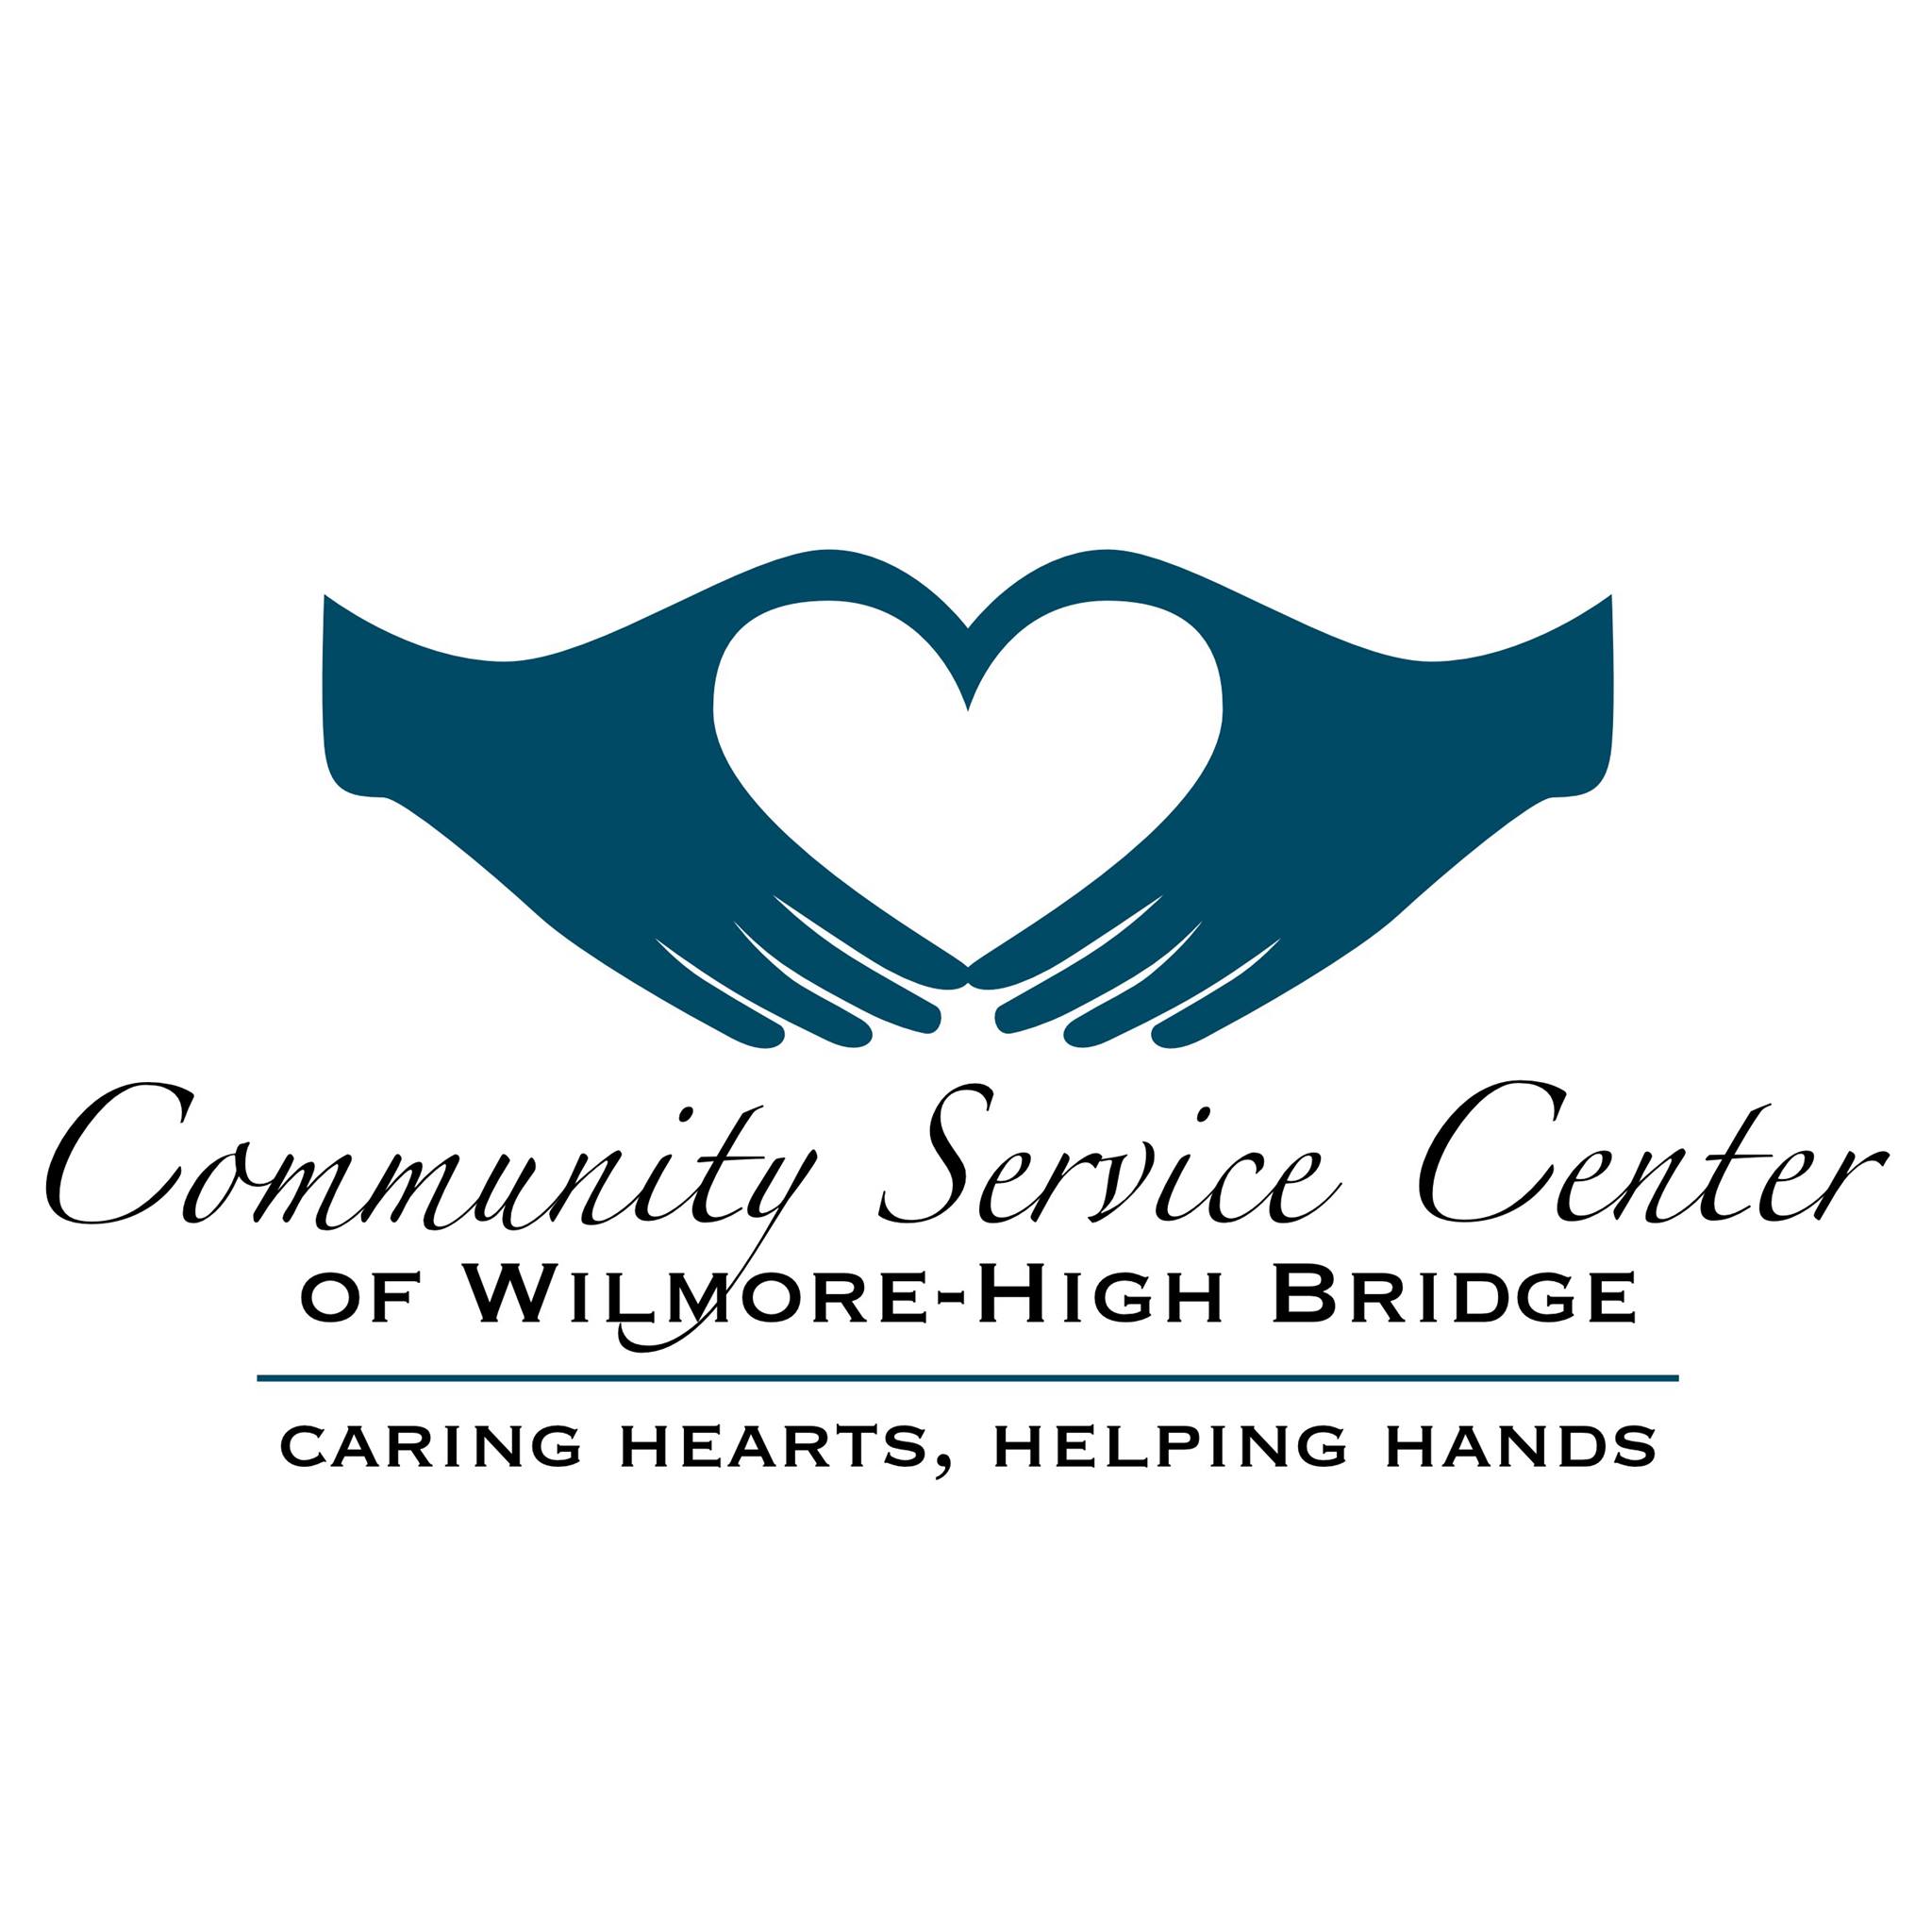 Community Service Center of Wilmore/High Bridge